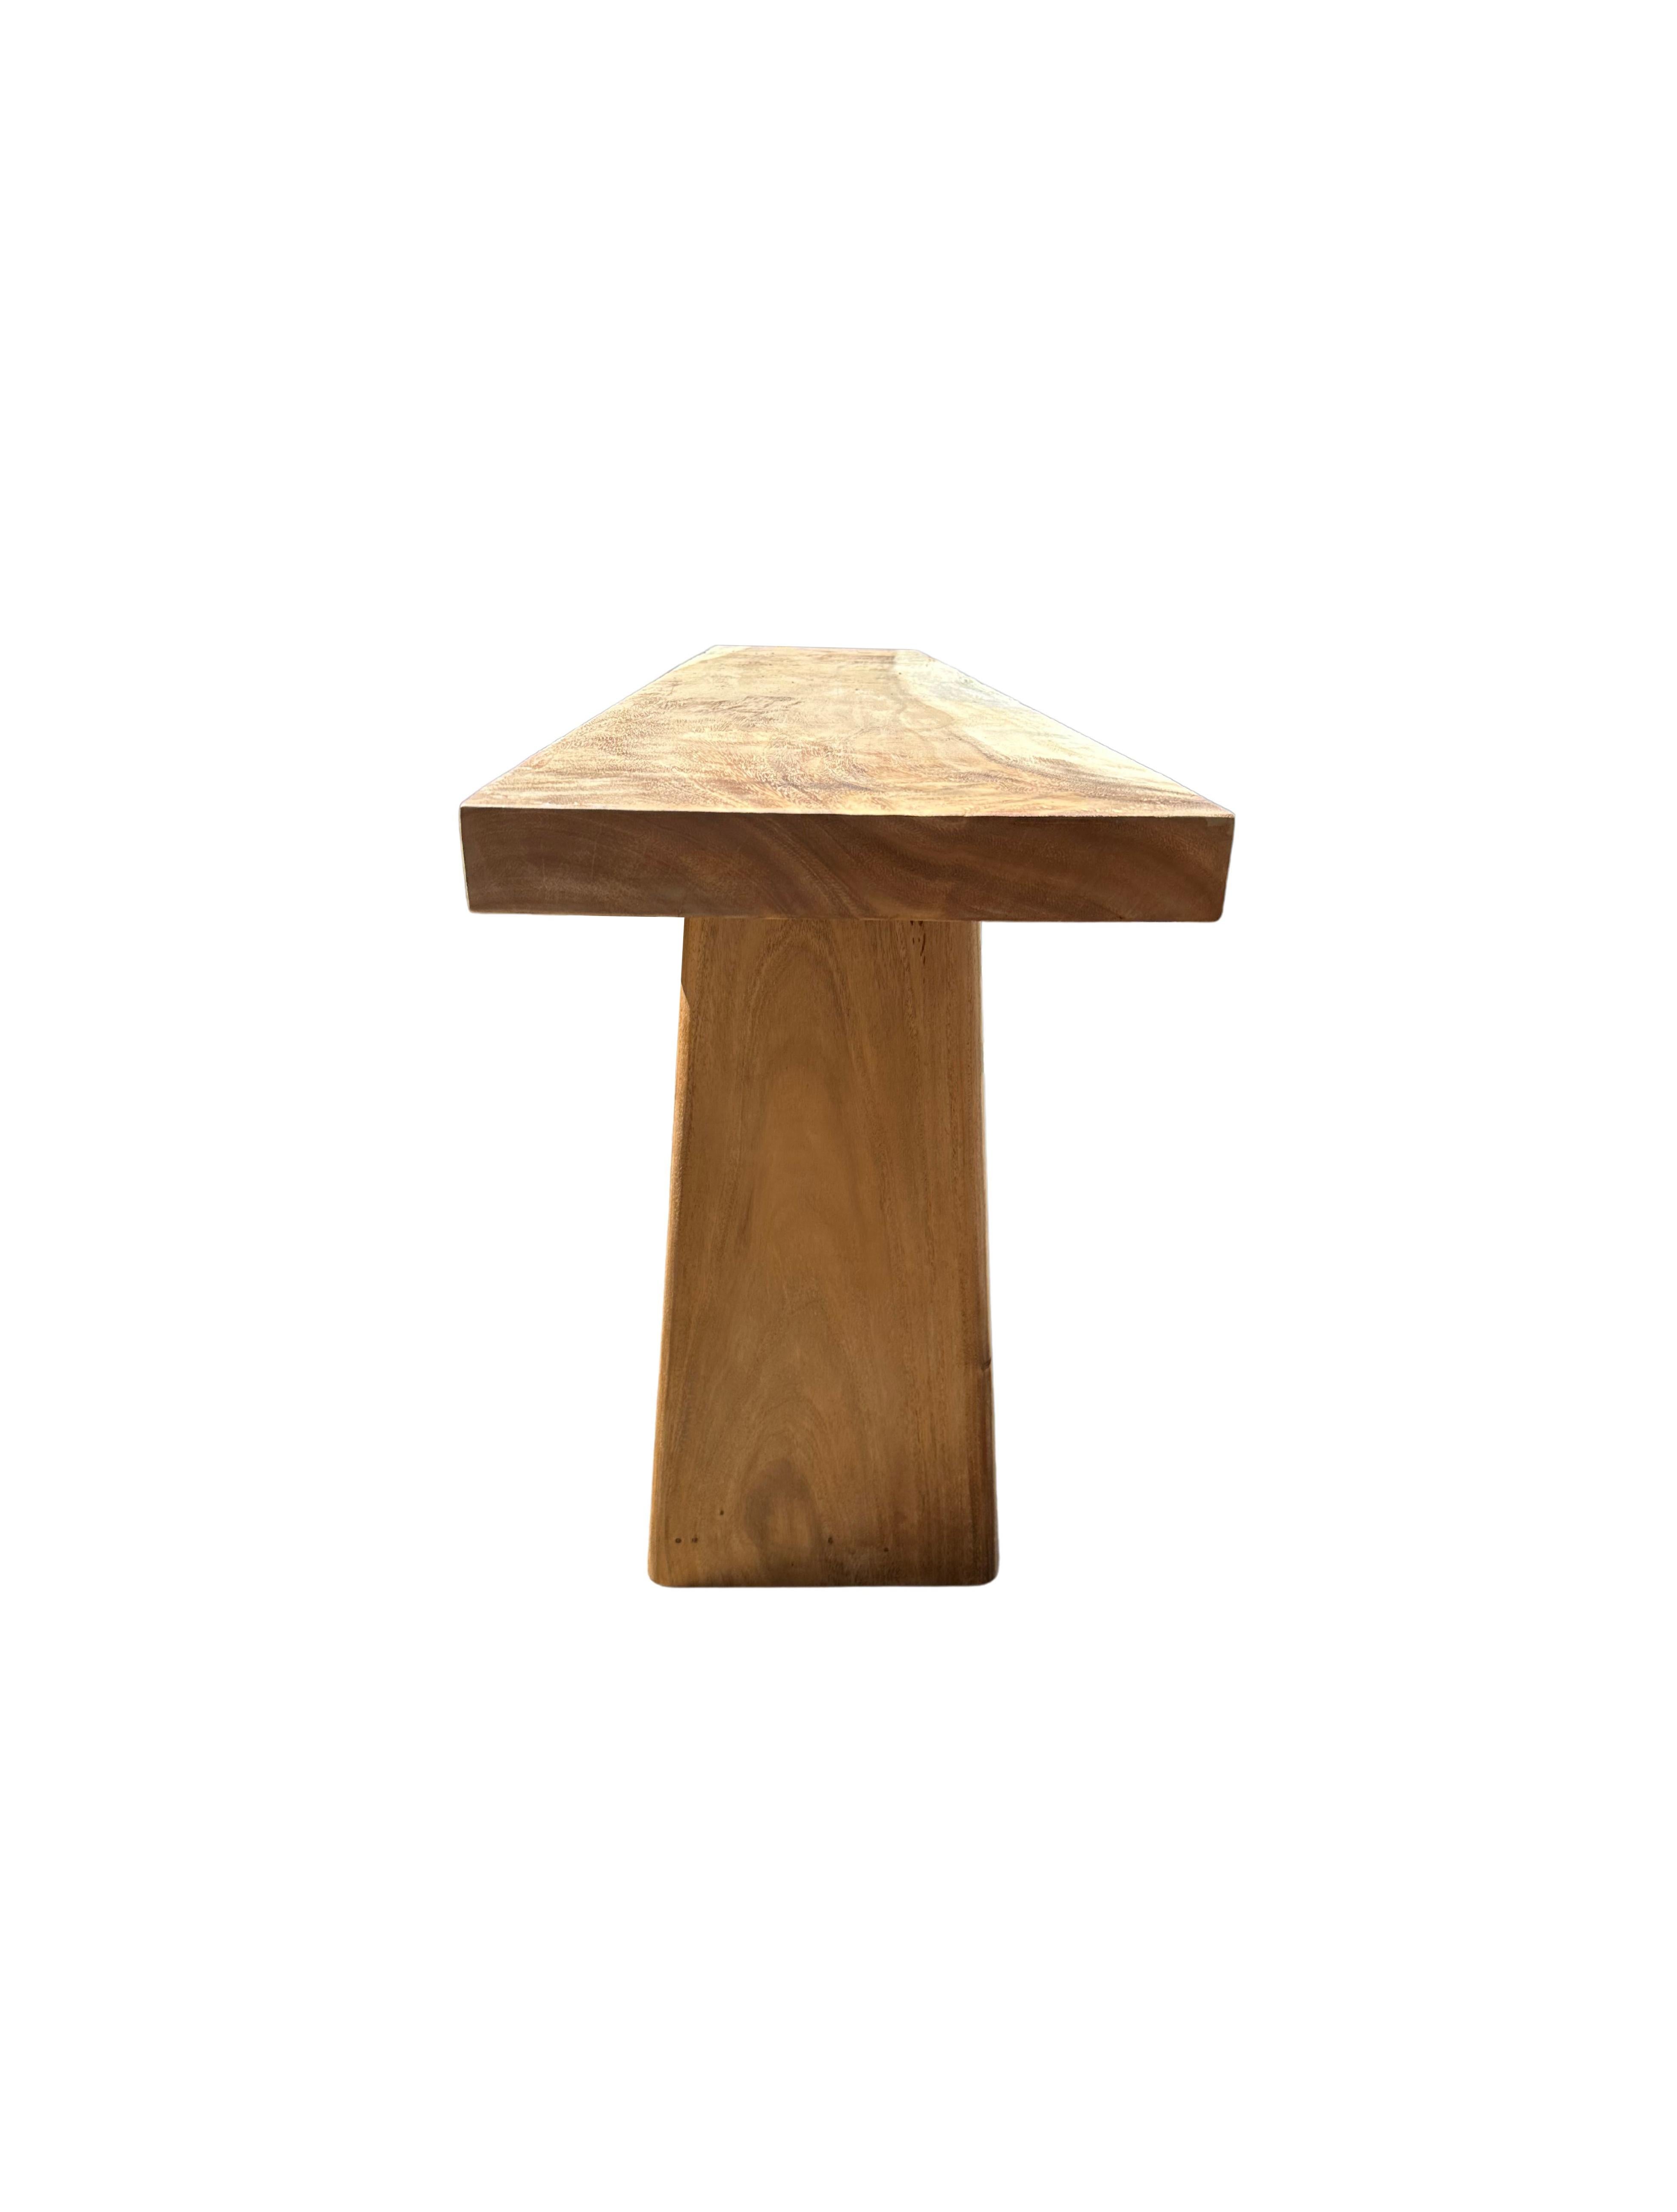 narrow natural wood console table